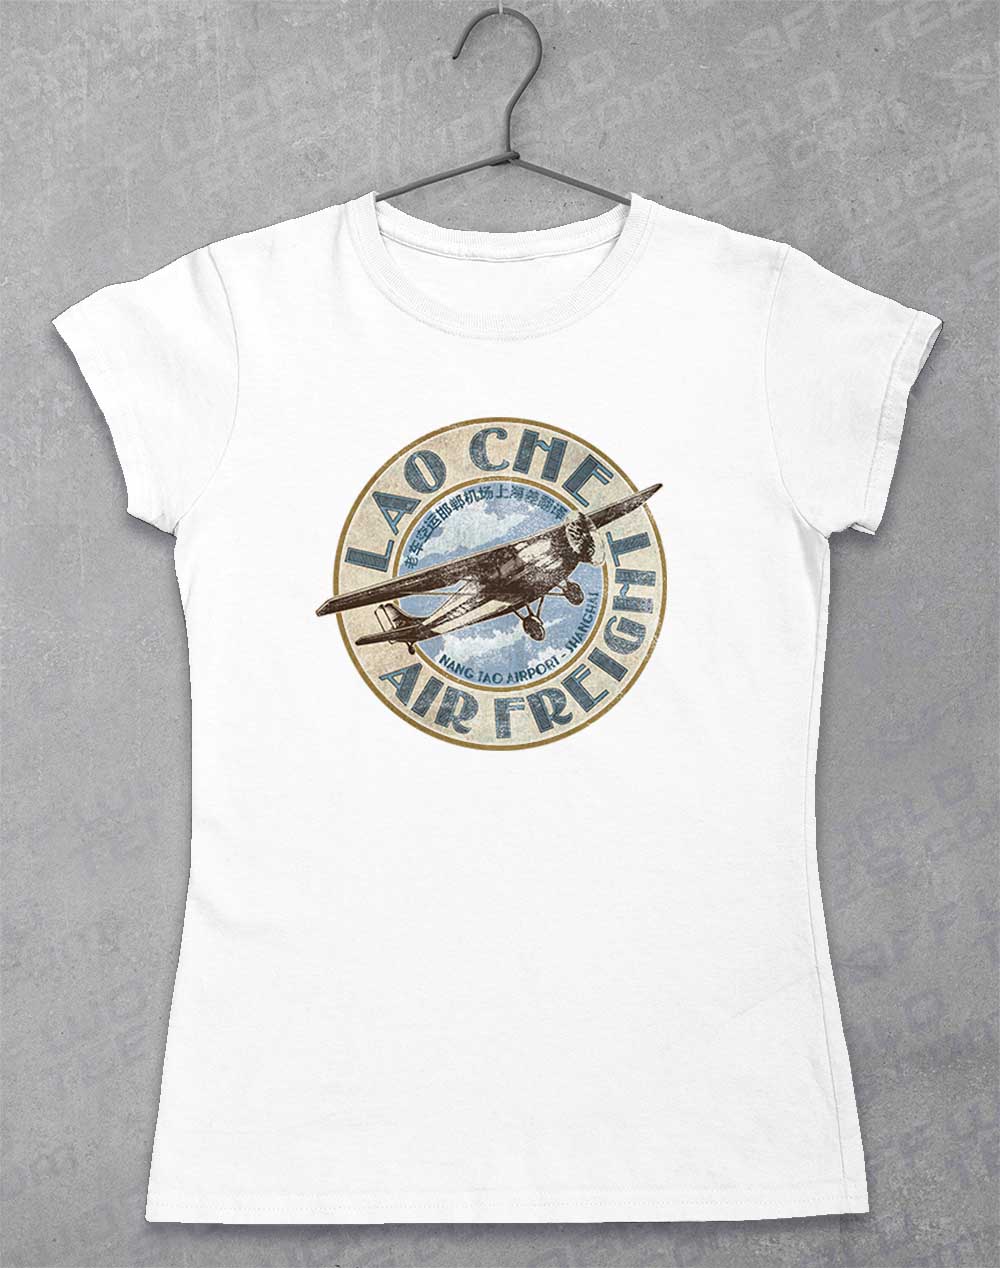 White - Lao Che Air Freight Women's T-Shirt